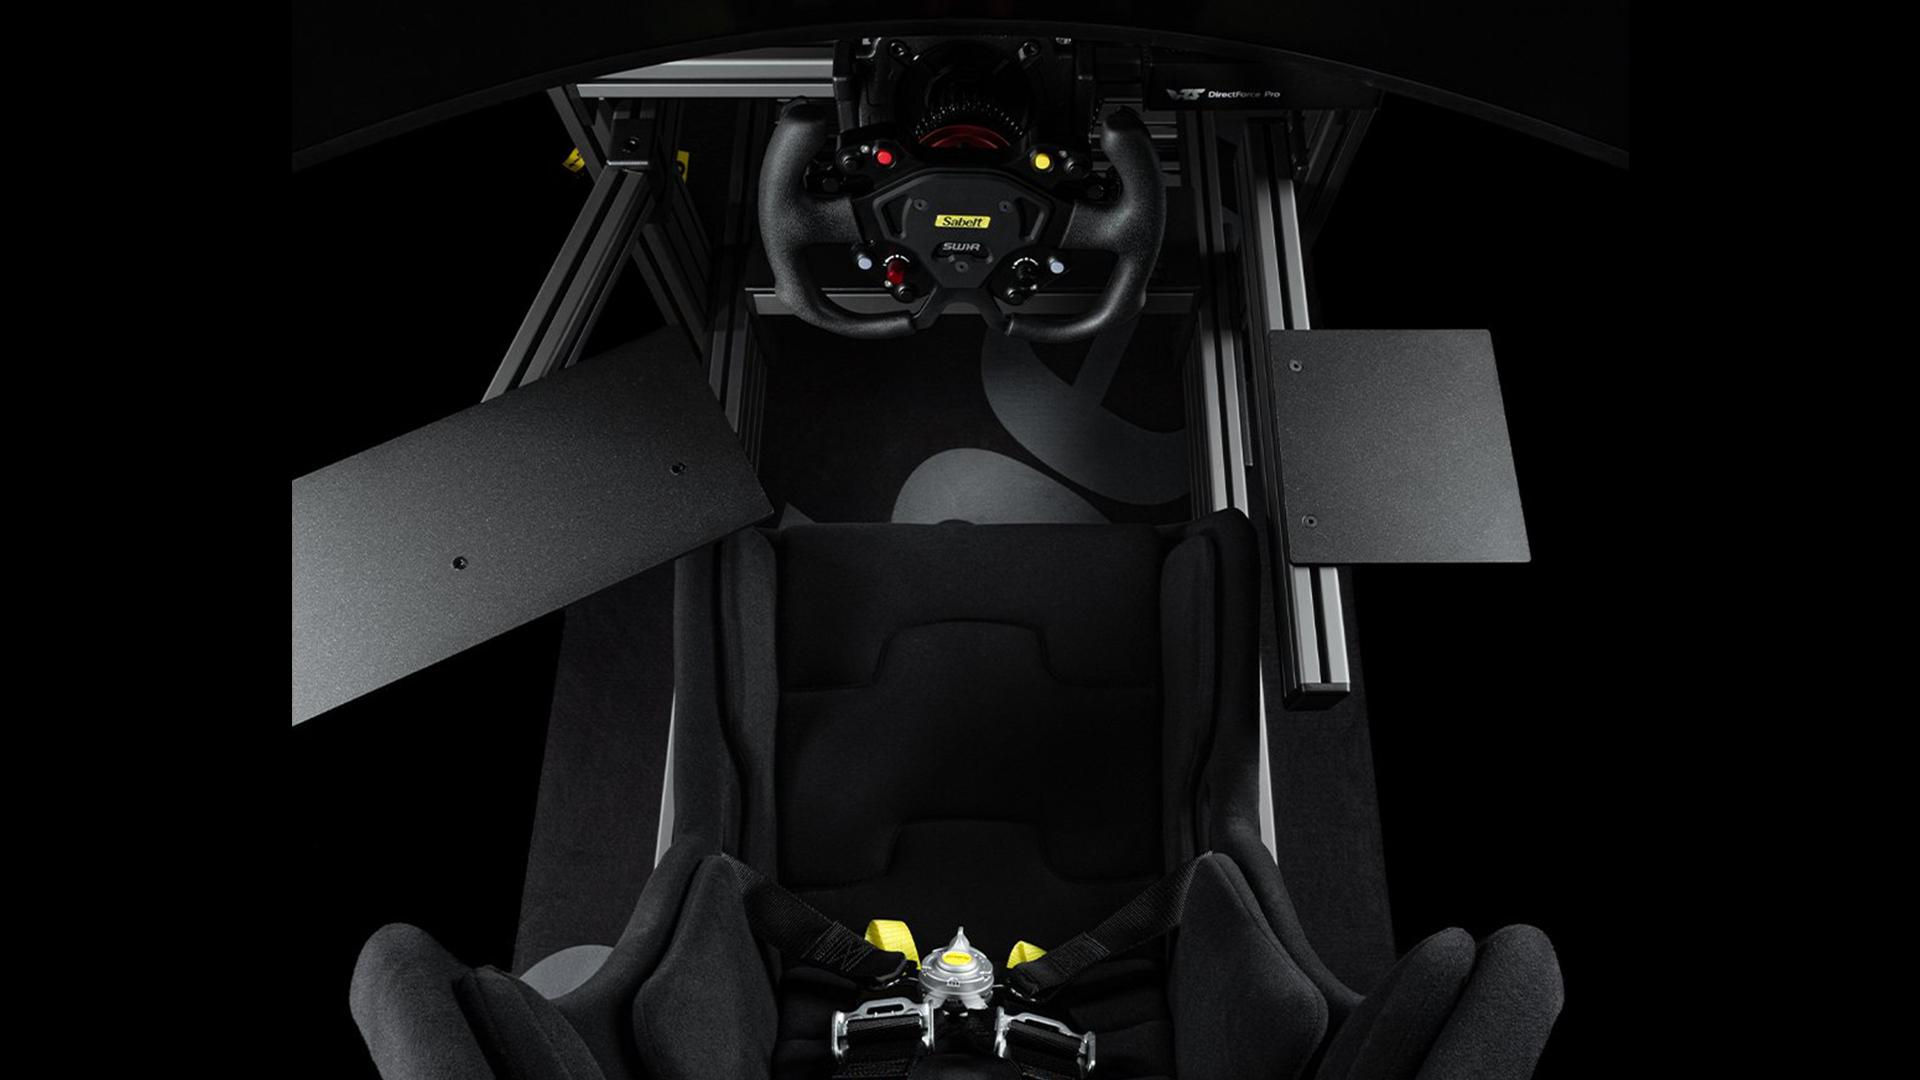 Sabelt launch range of smart-looking sim racing cockpits